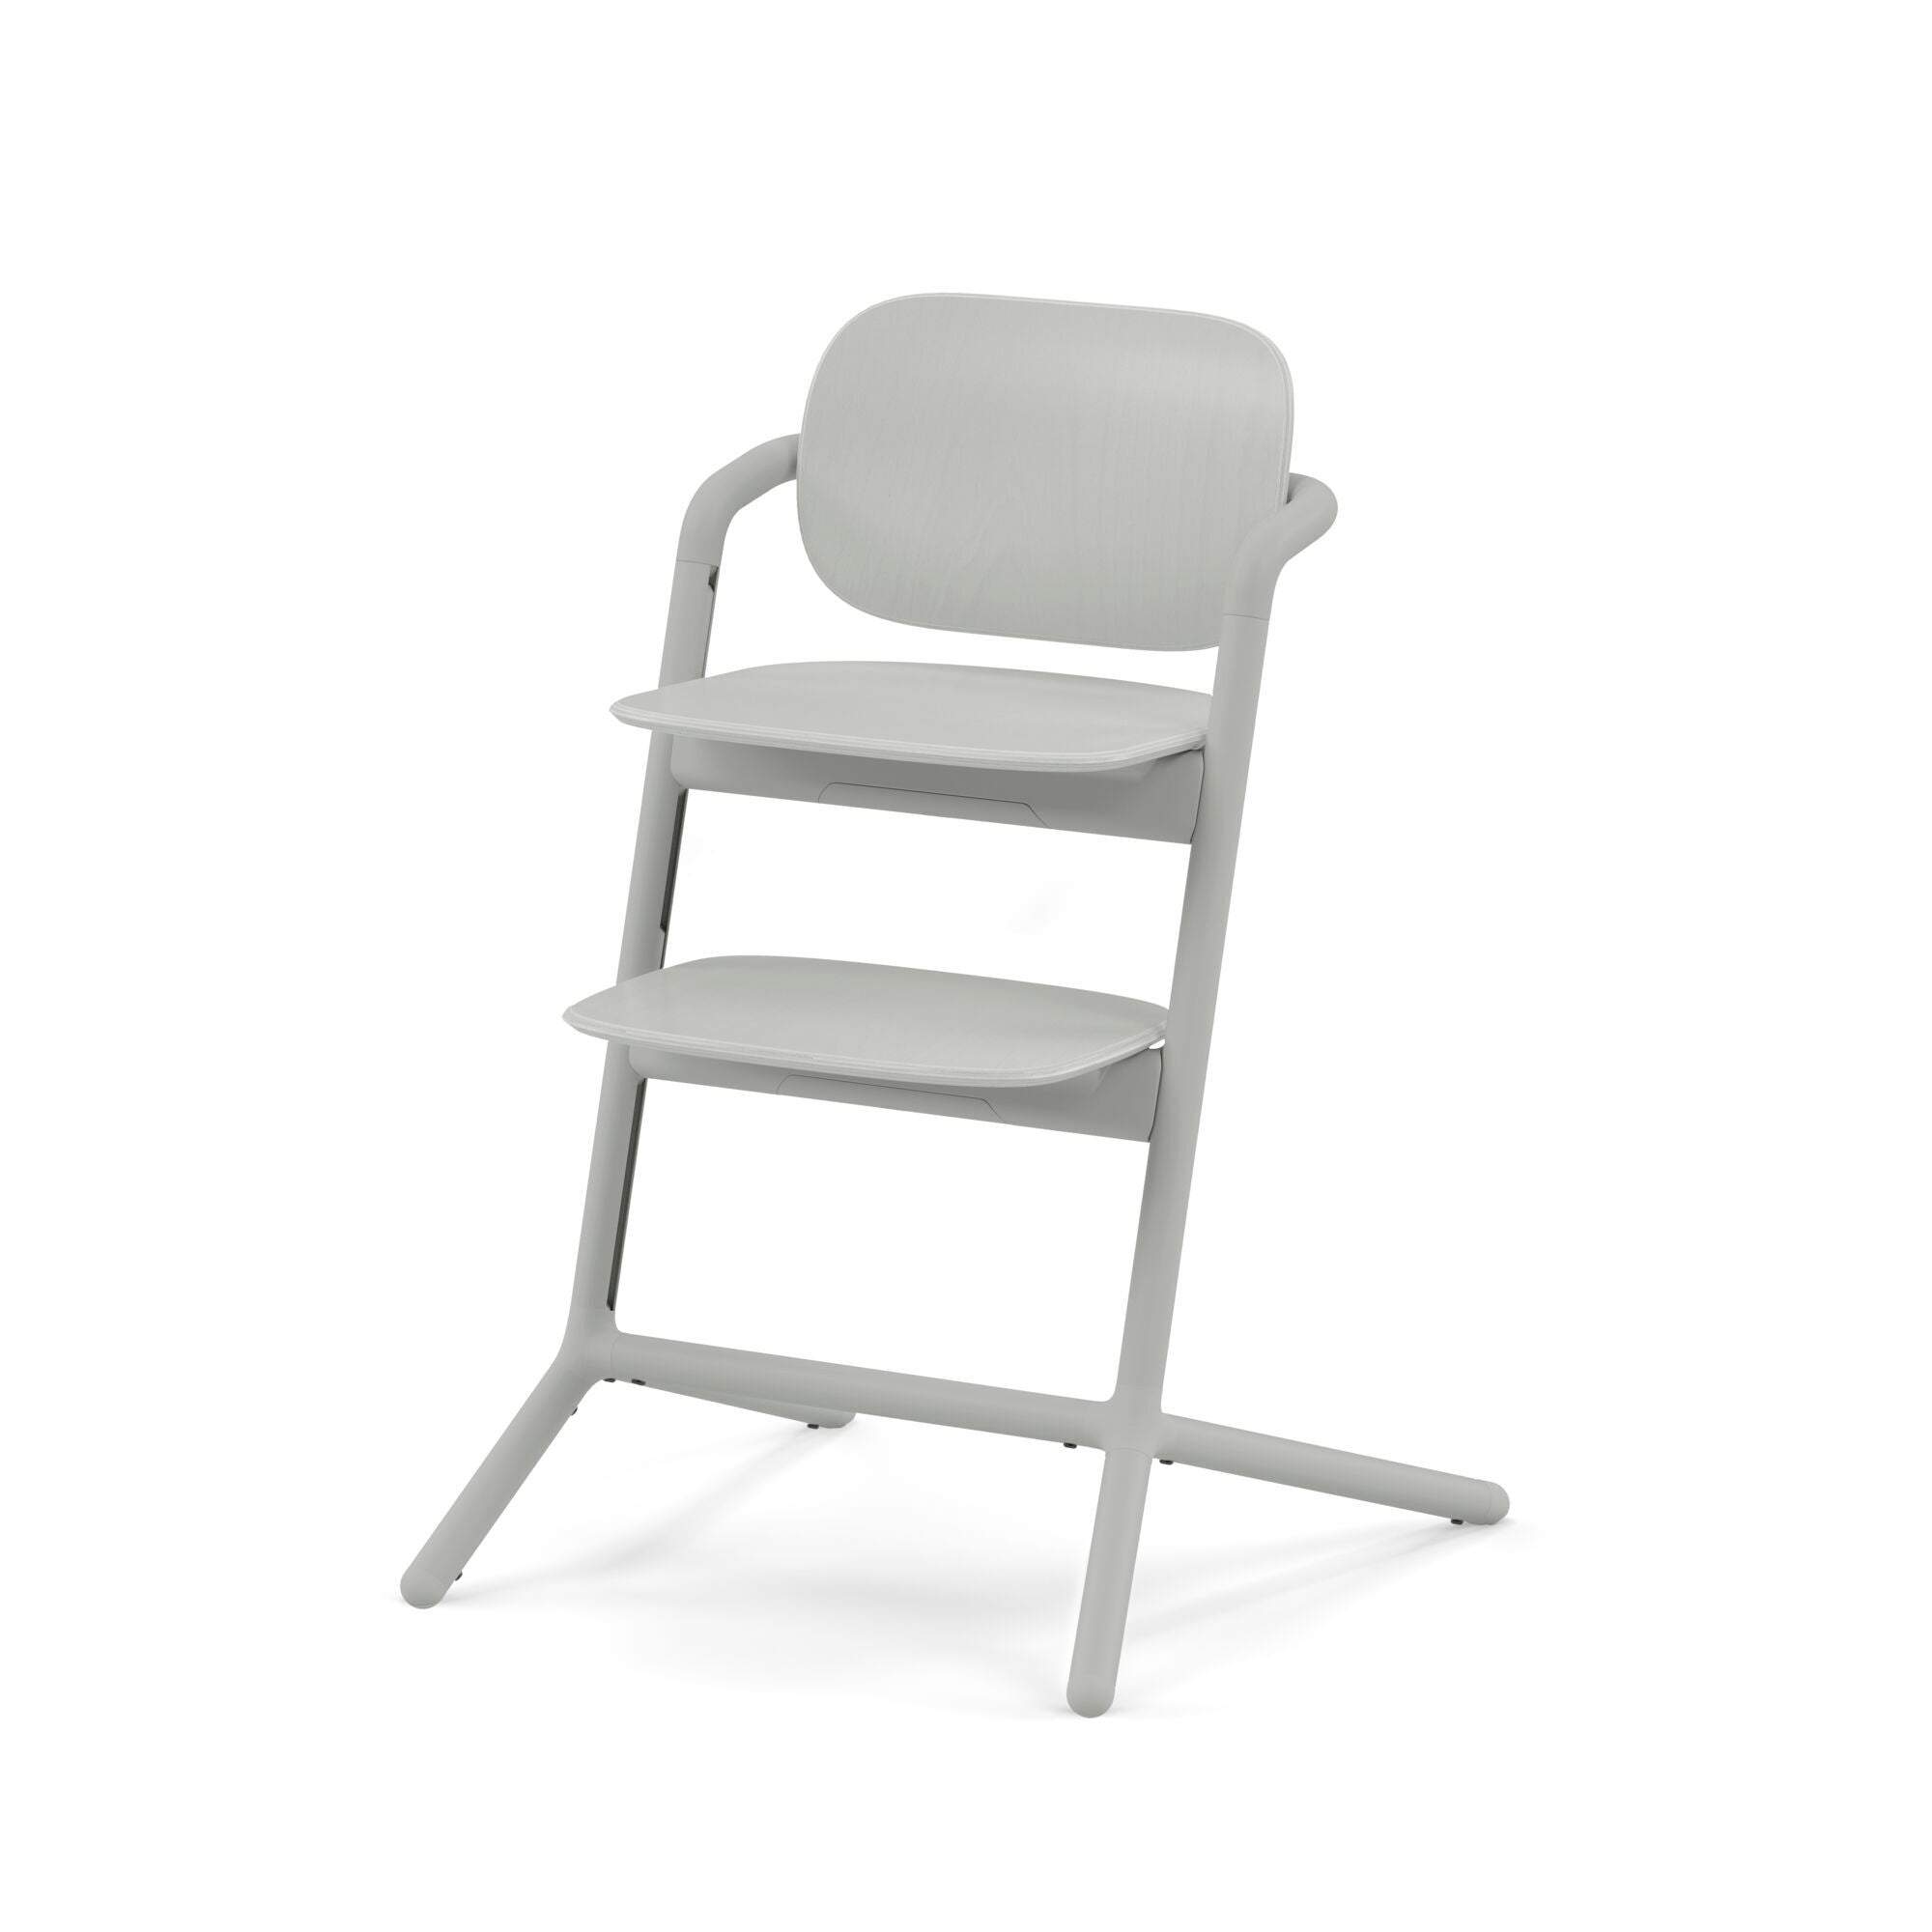 CYBEX LEMO 2 High Chair 4-in-1